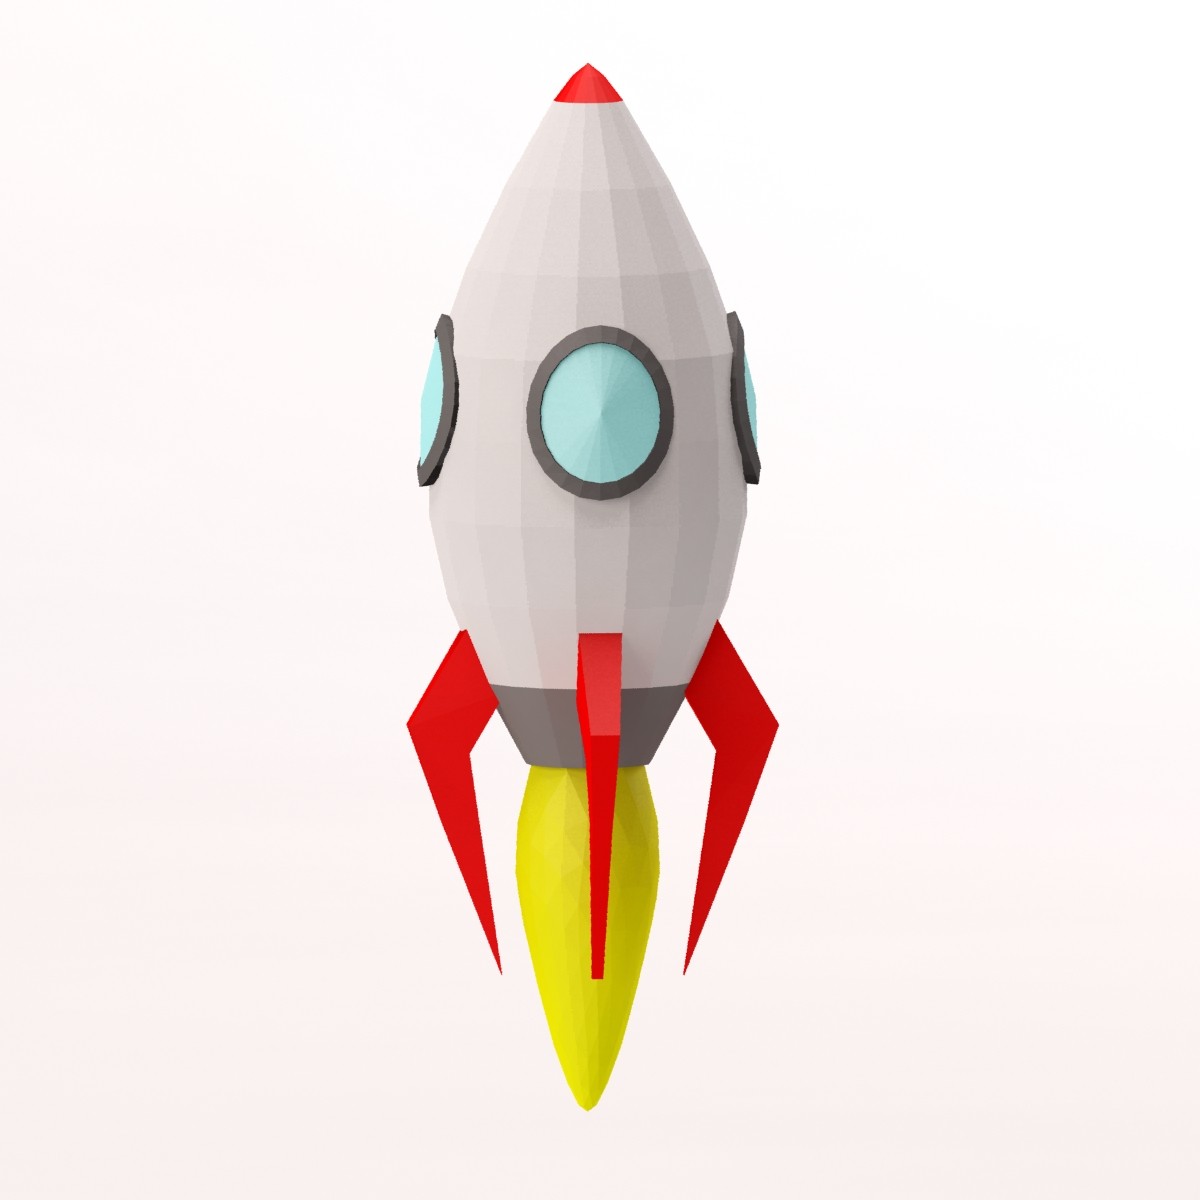 ArtStation - Cartoon low poly rocket